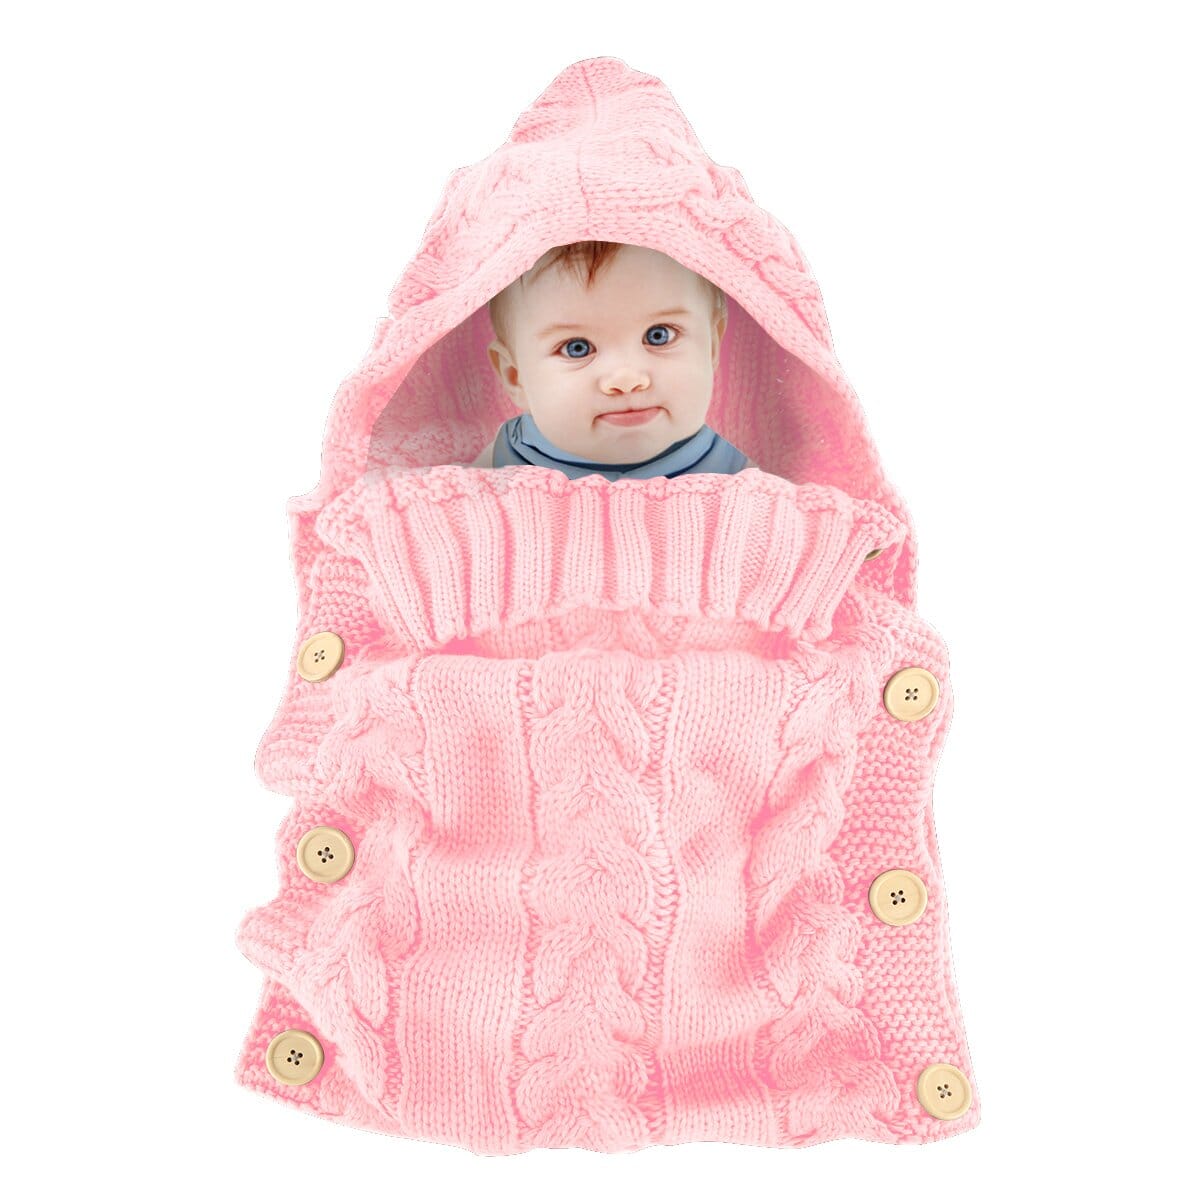 Handmade Hooded Knitted Baby Bag Pink PillowNap